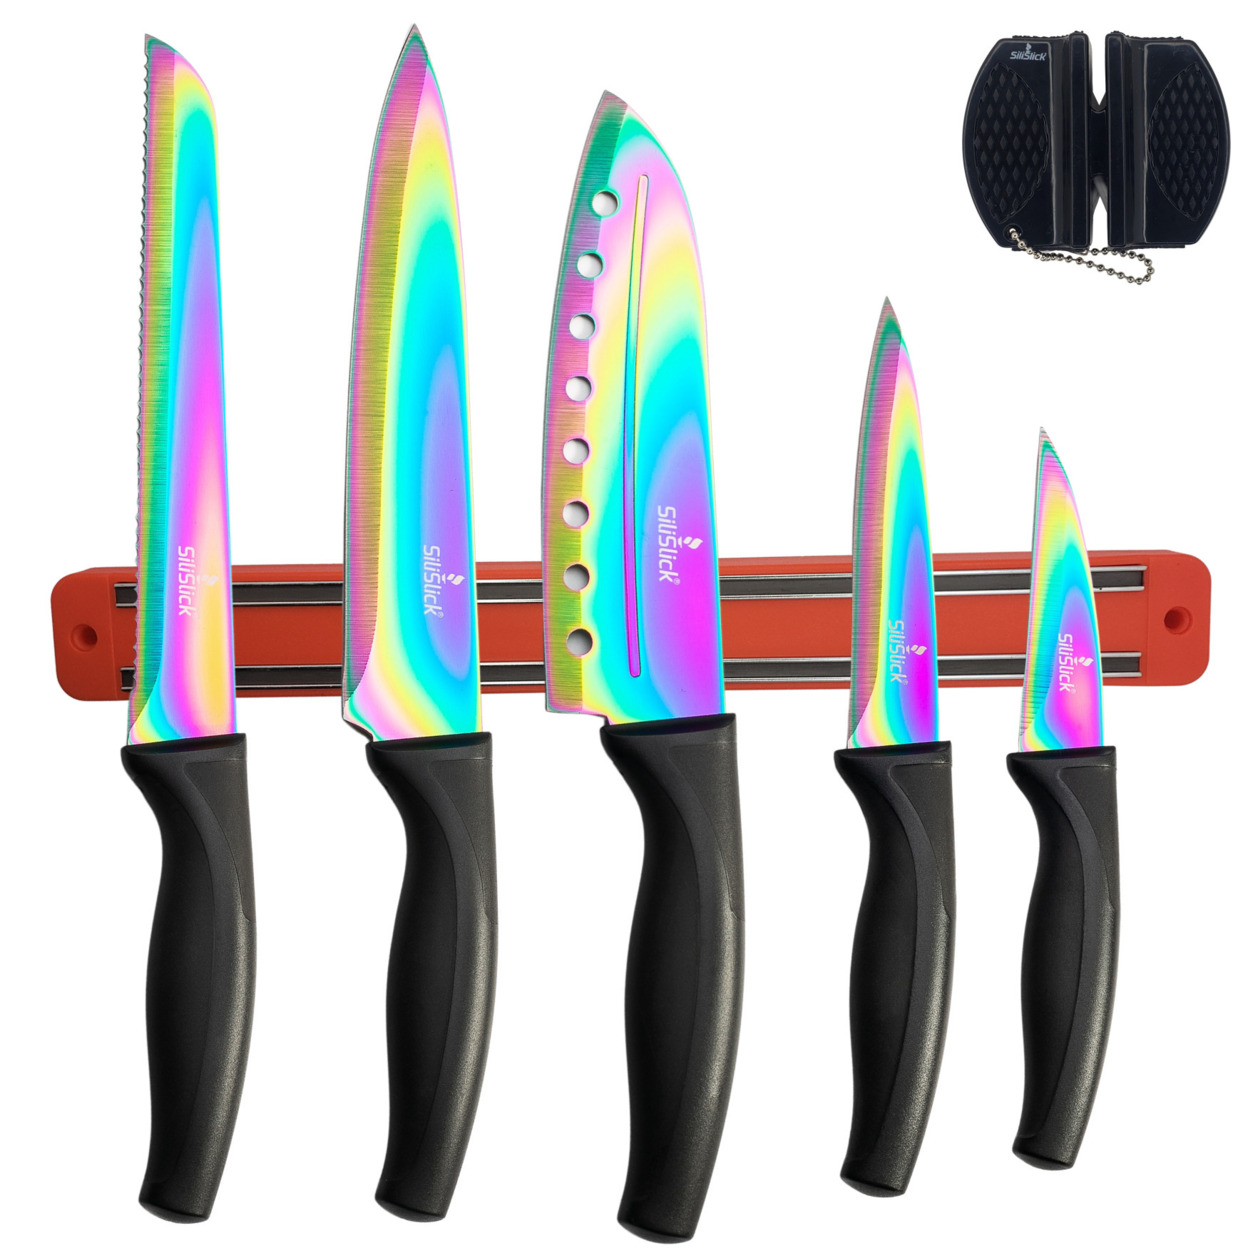 SiliSlick Stainless Steel Black Handle Knife Set - Titanium Coated Utility Knife, Santoku, Bread, Chef, & Paring + Sharpener & Mounting Rack